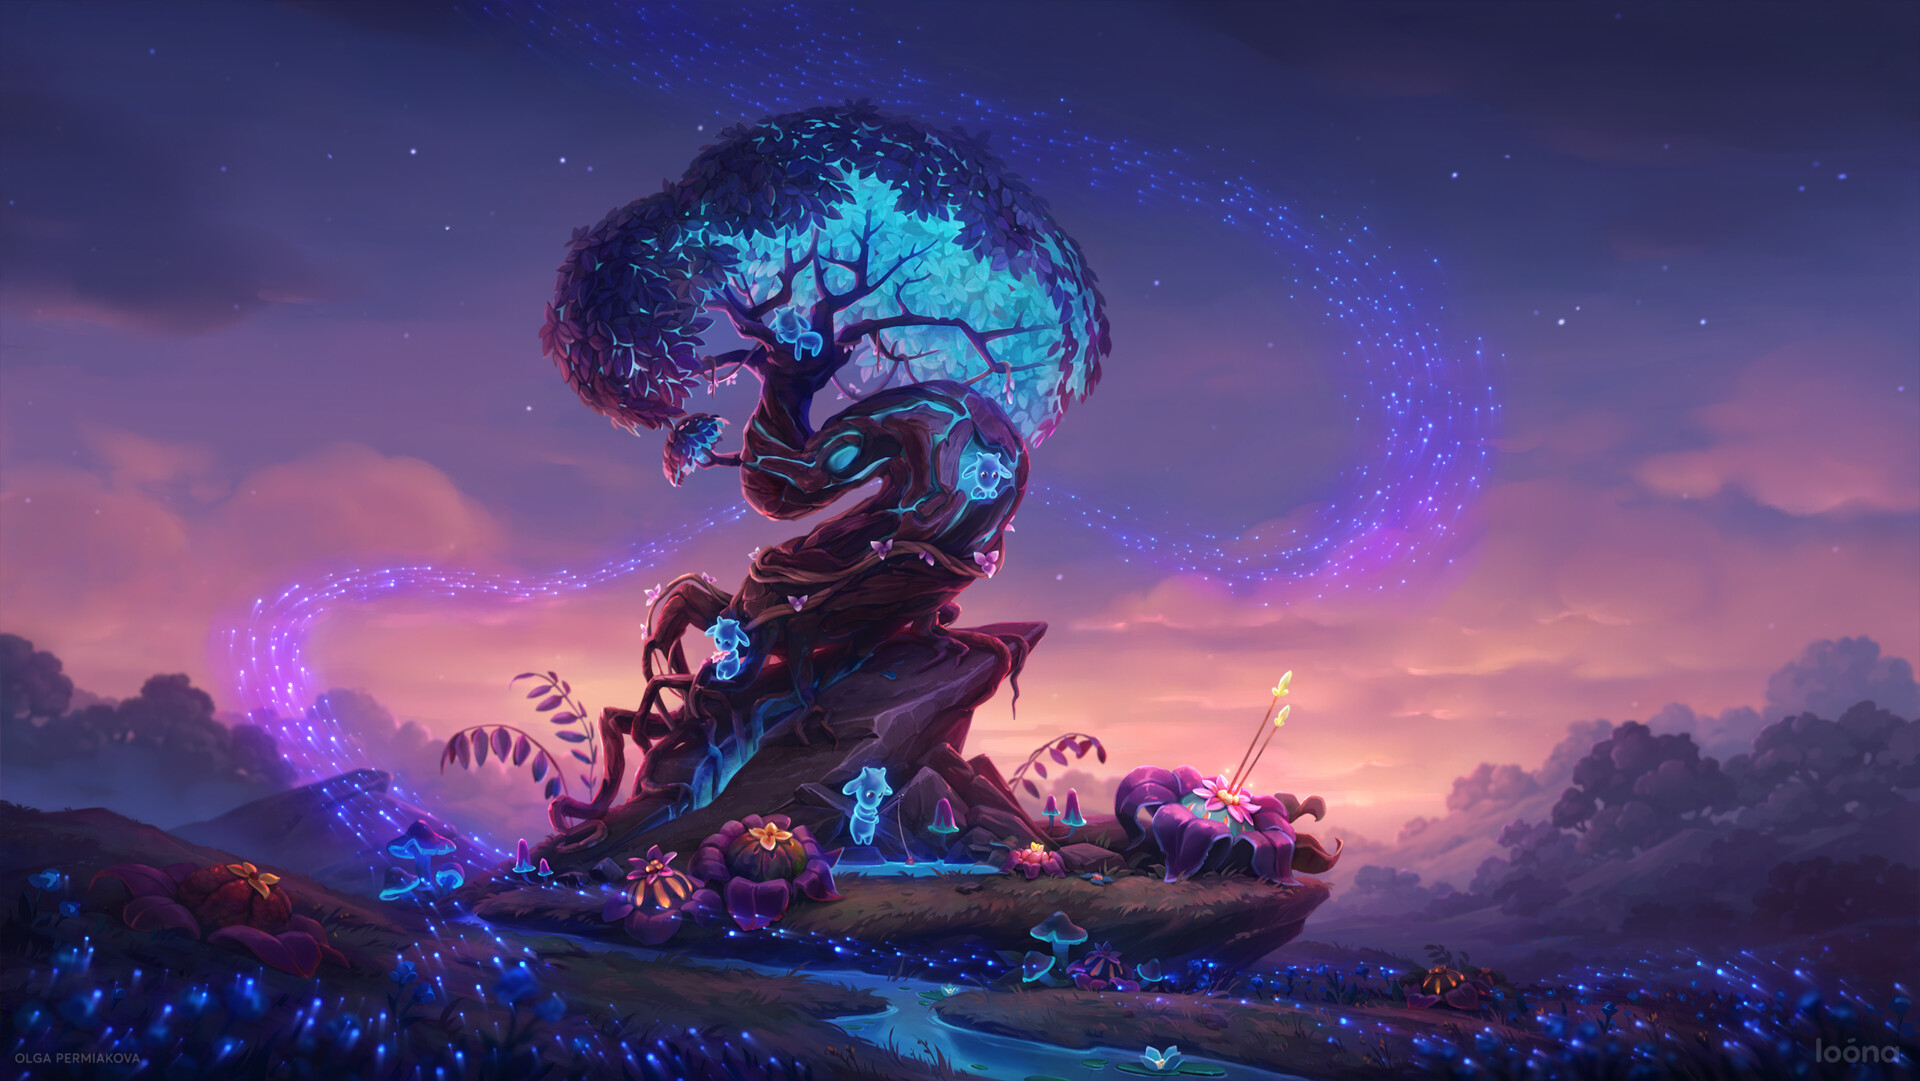 The Luminous Realm HD Fantasy Forest Wallpaper, HD Fantasy 4K ...